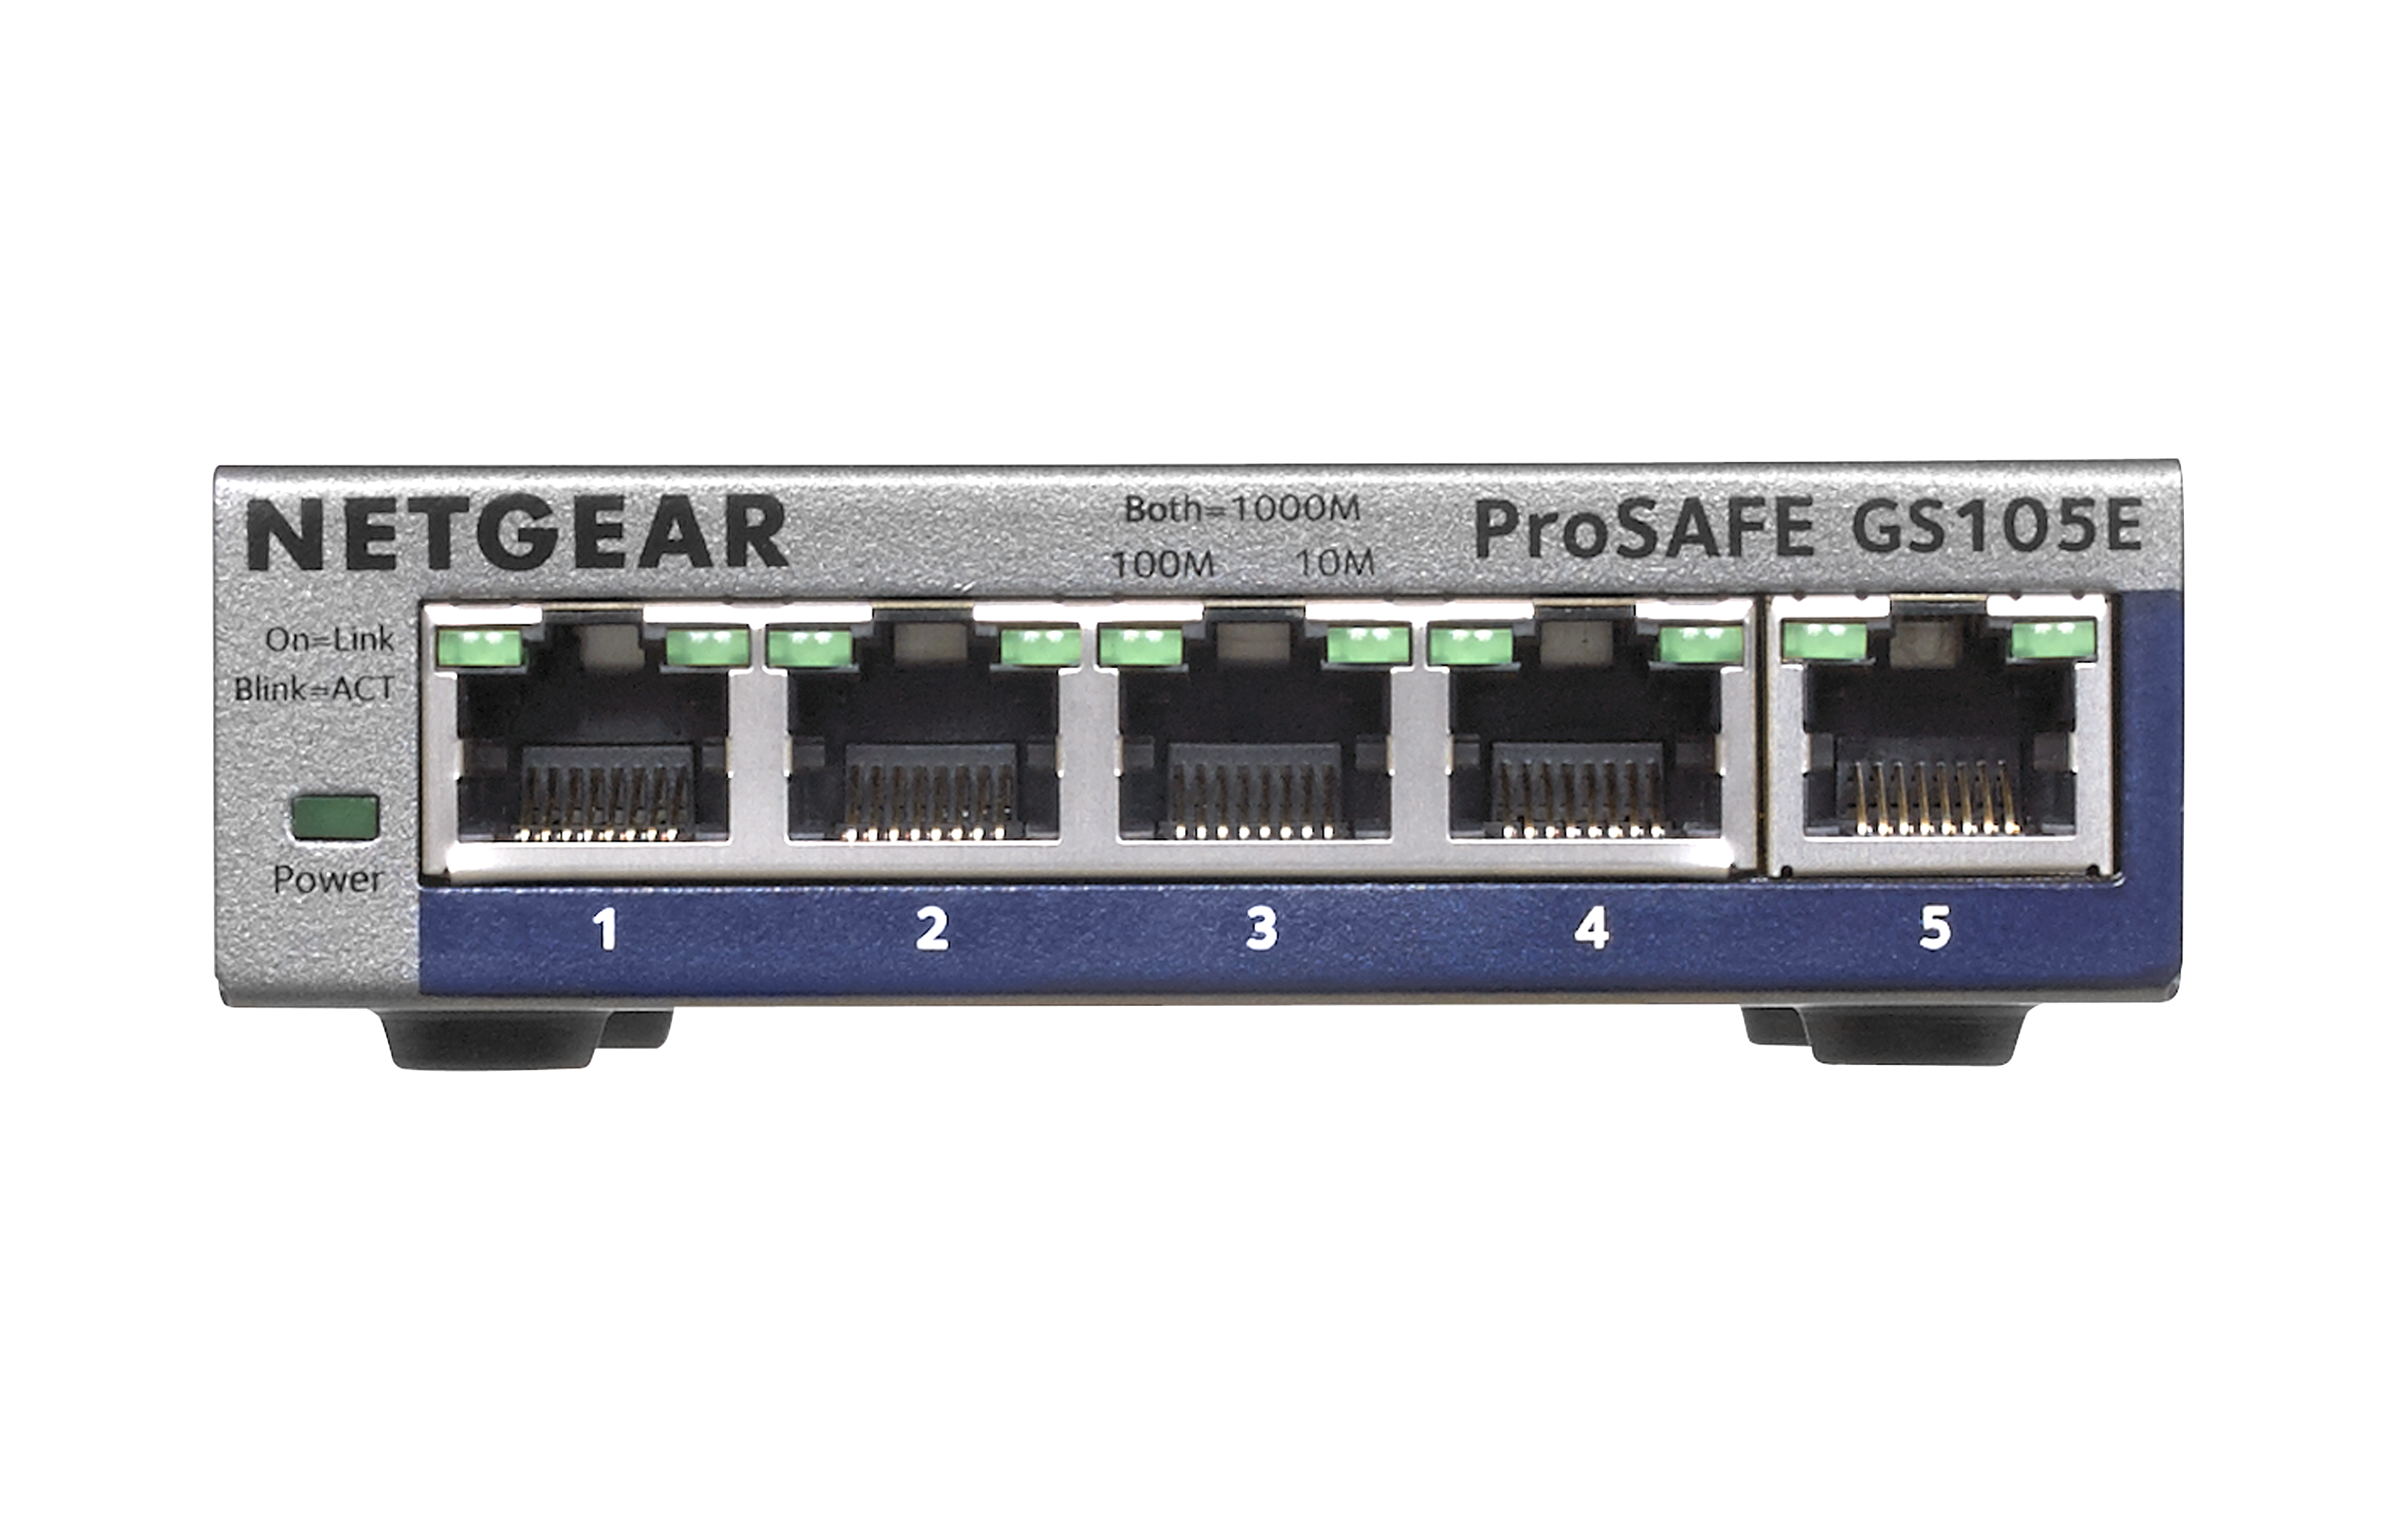 New NetGear Prosafe GS105Ev2 5-Port Gigabit Ethernet Plus Switch GS105E-2A1NAS 